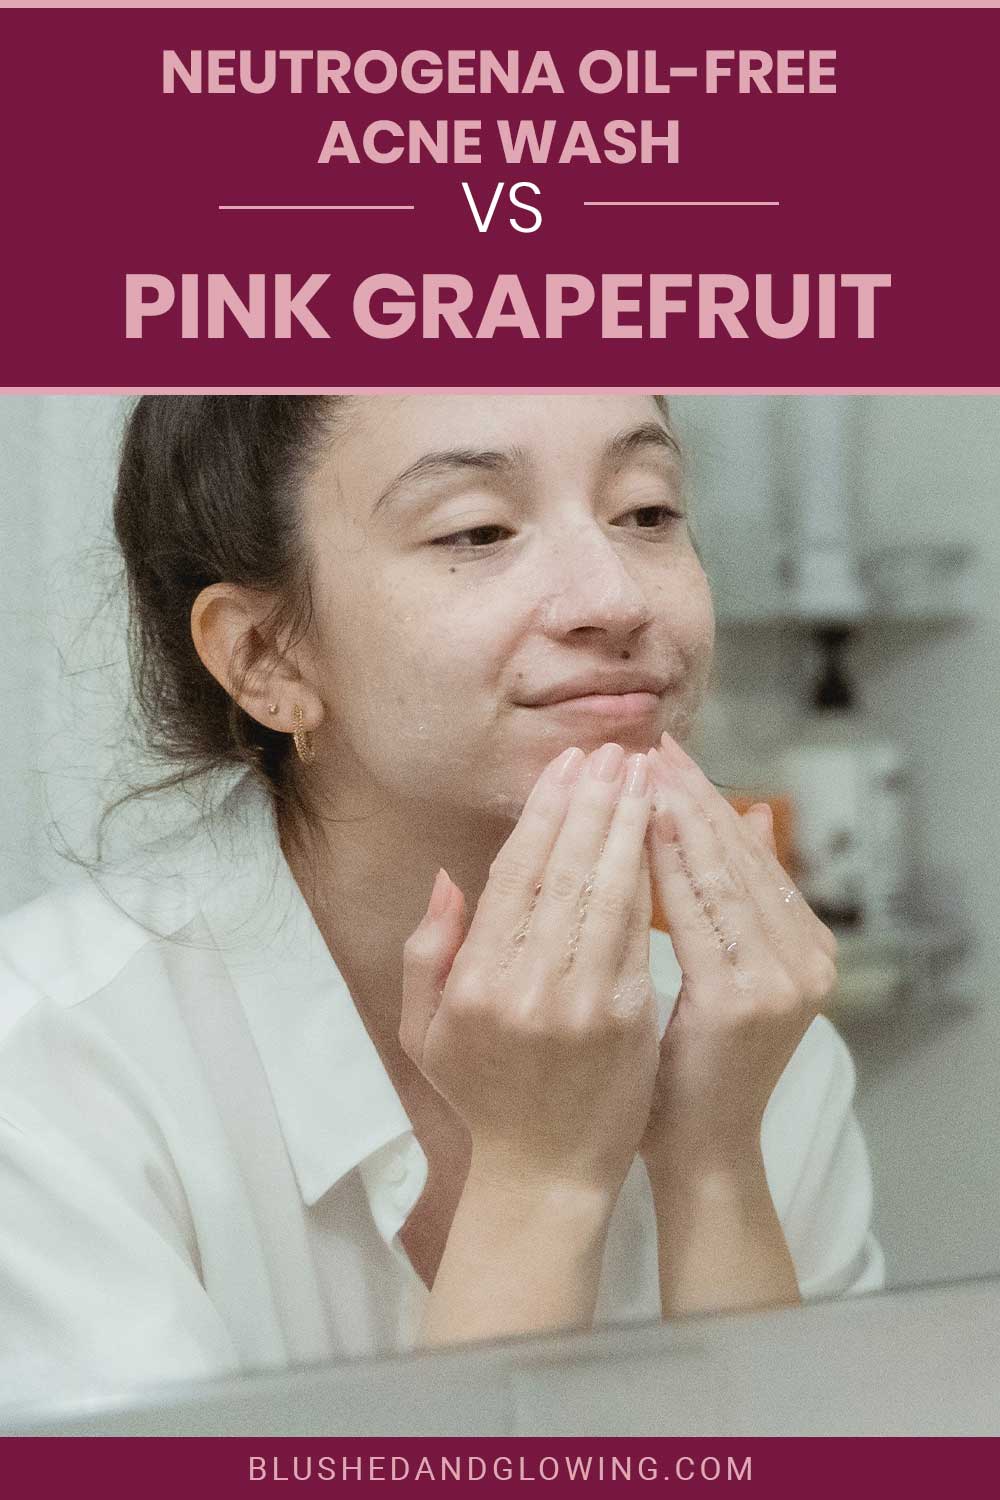 Woman wearing a white shirt applying face wash - Neutrogena Oil-Free Acne Wash vs. Pink Grapefruit.